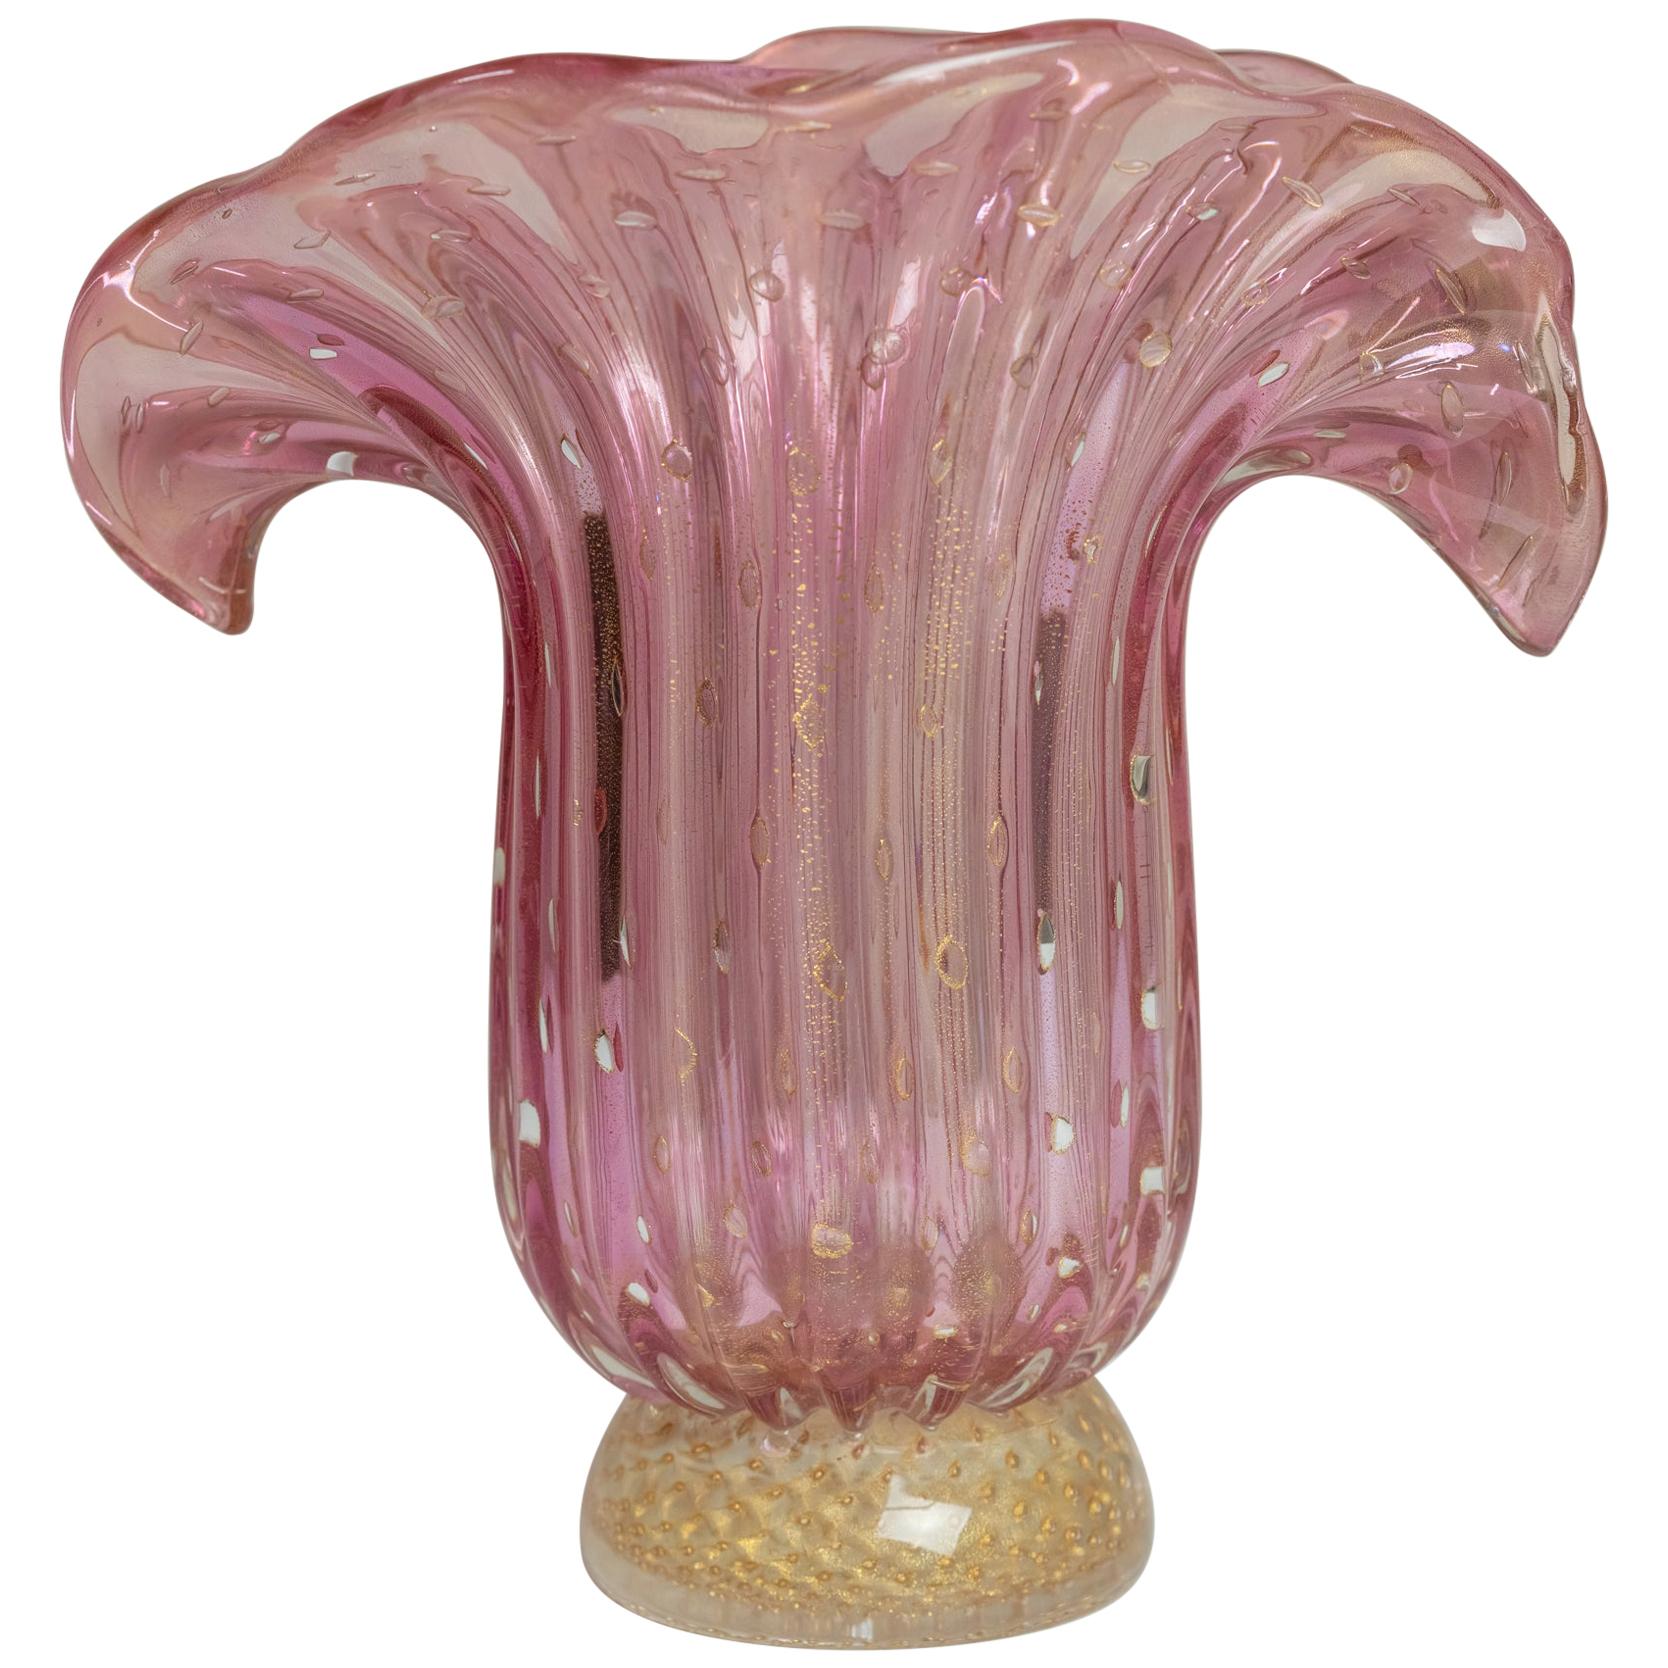 Grand vase en verre d'art de Murano rose et or pour Promemoria